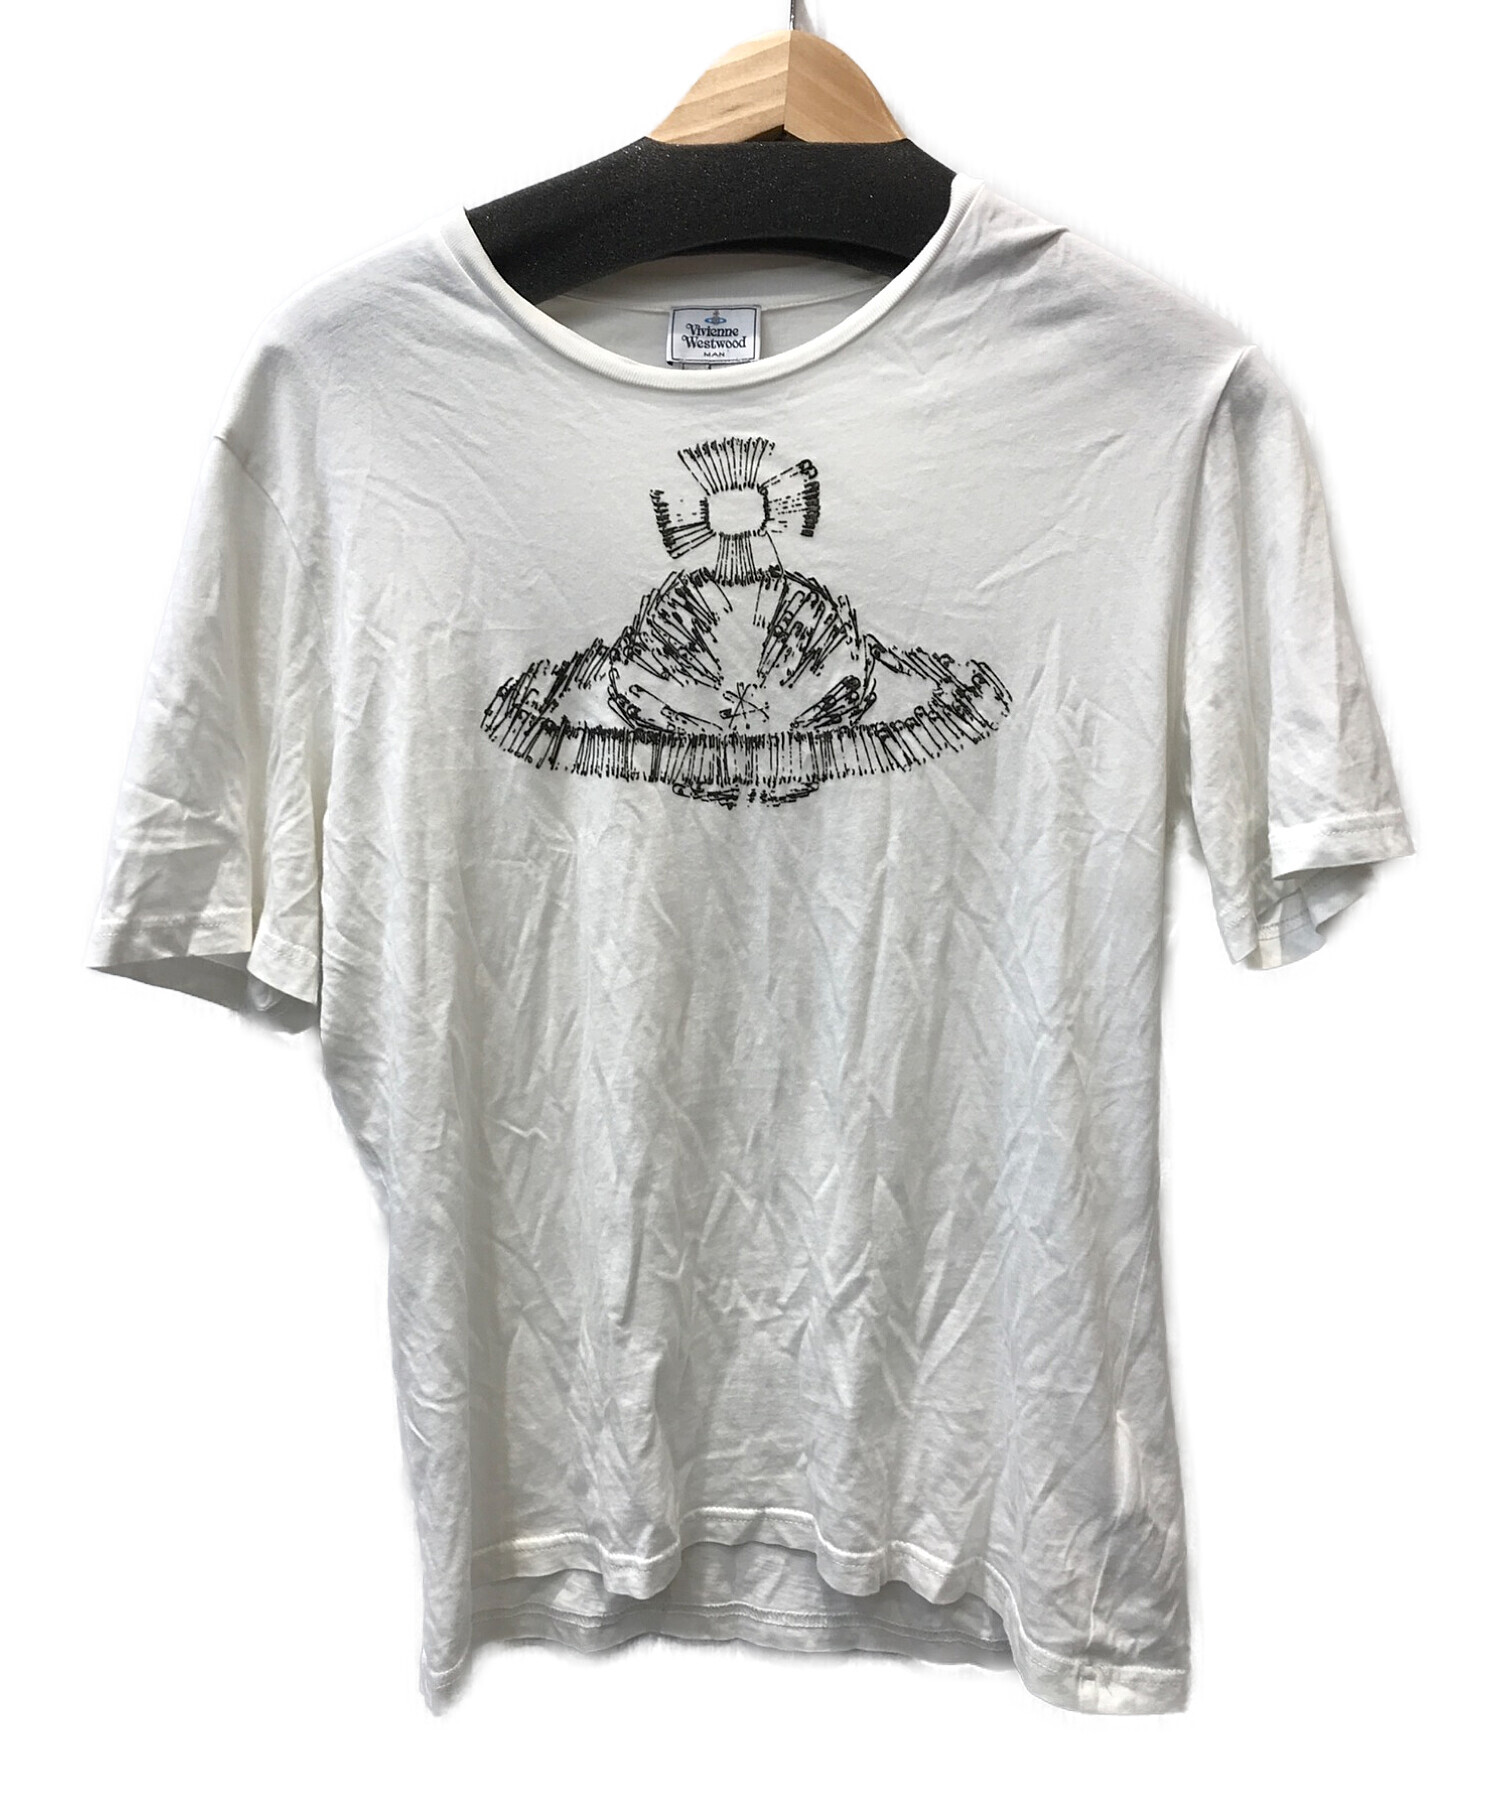 Vivienne Westwood man (ヴィヴィアン ウェストウッド マン) デザインオーブTシャツ ホワイト サイズ:L